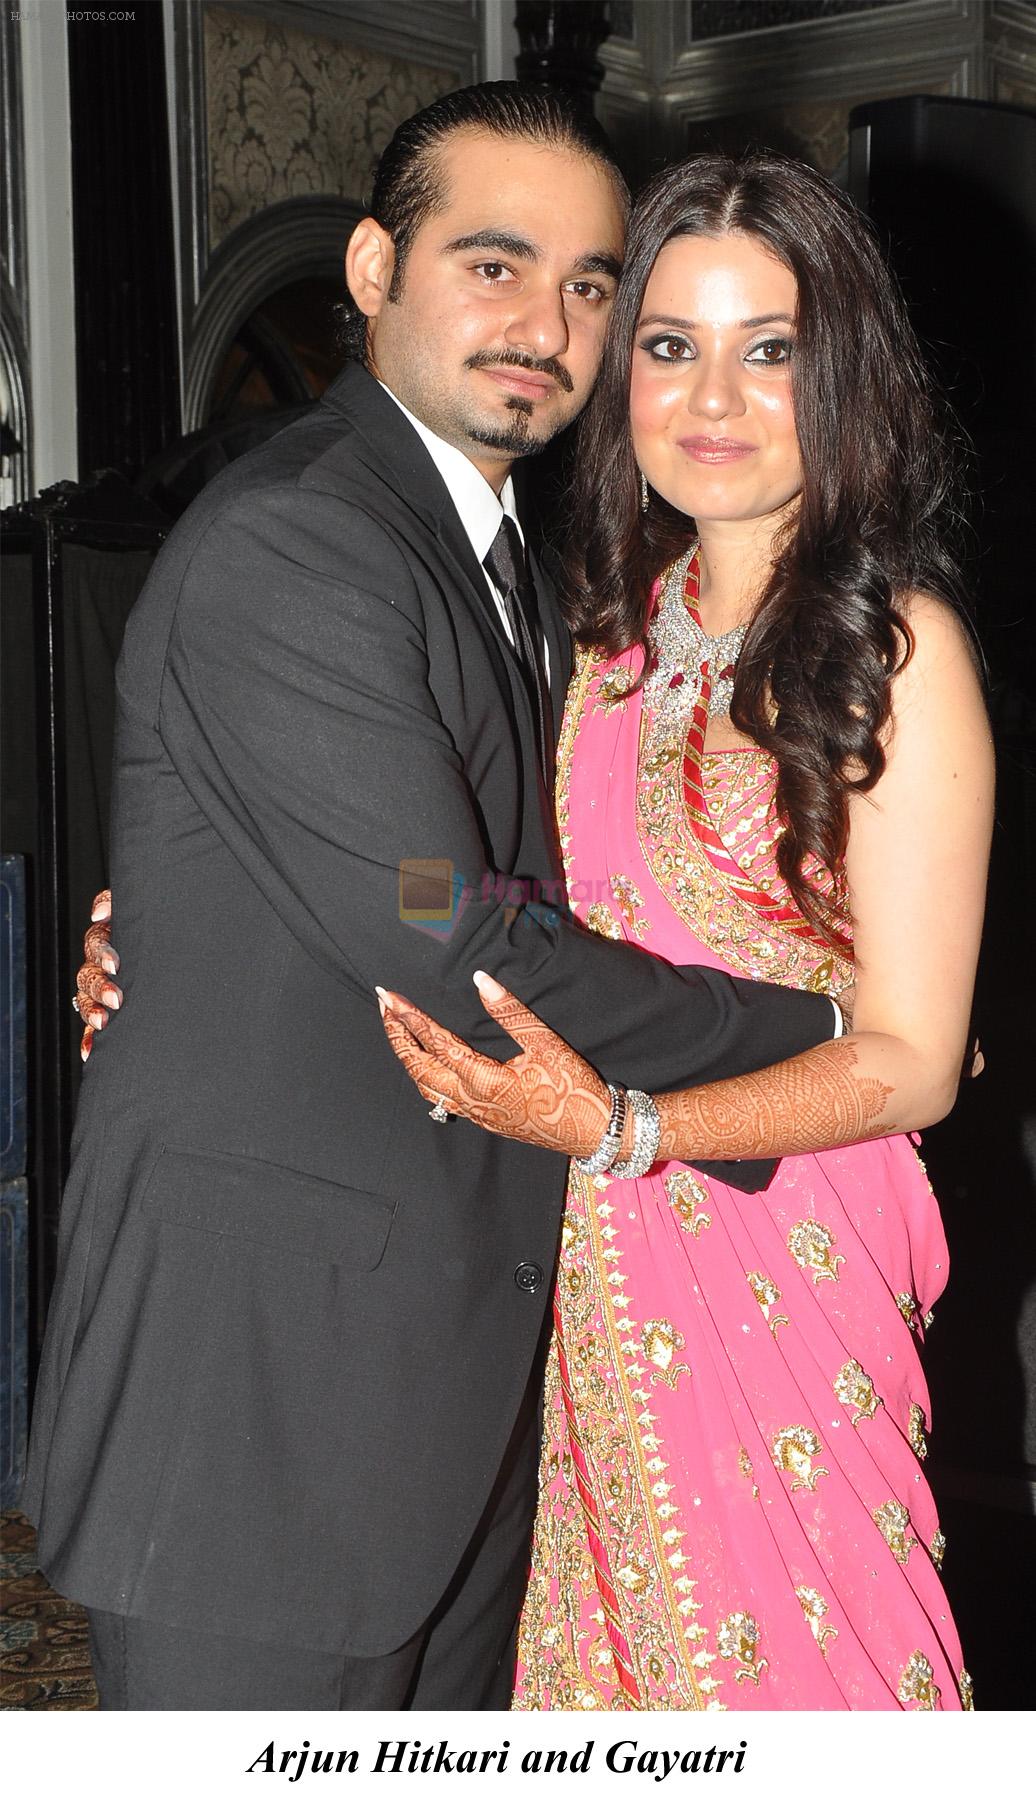 Arjun Hitkari and Gayatri at the Engagement ceremony of Arjun Hitkari with Gayatri on 19th April 2012